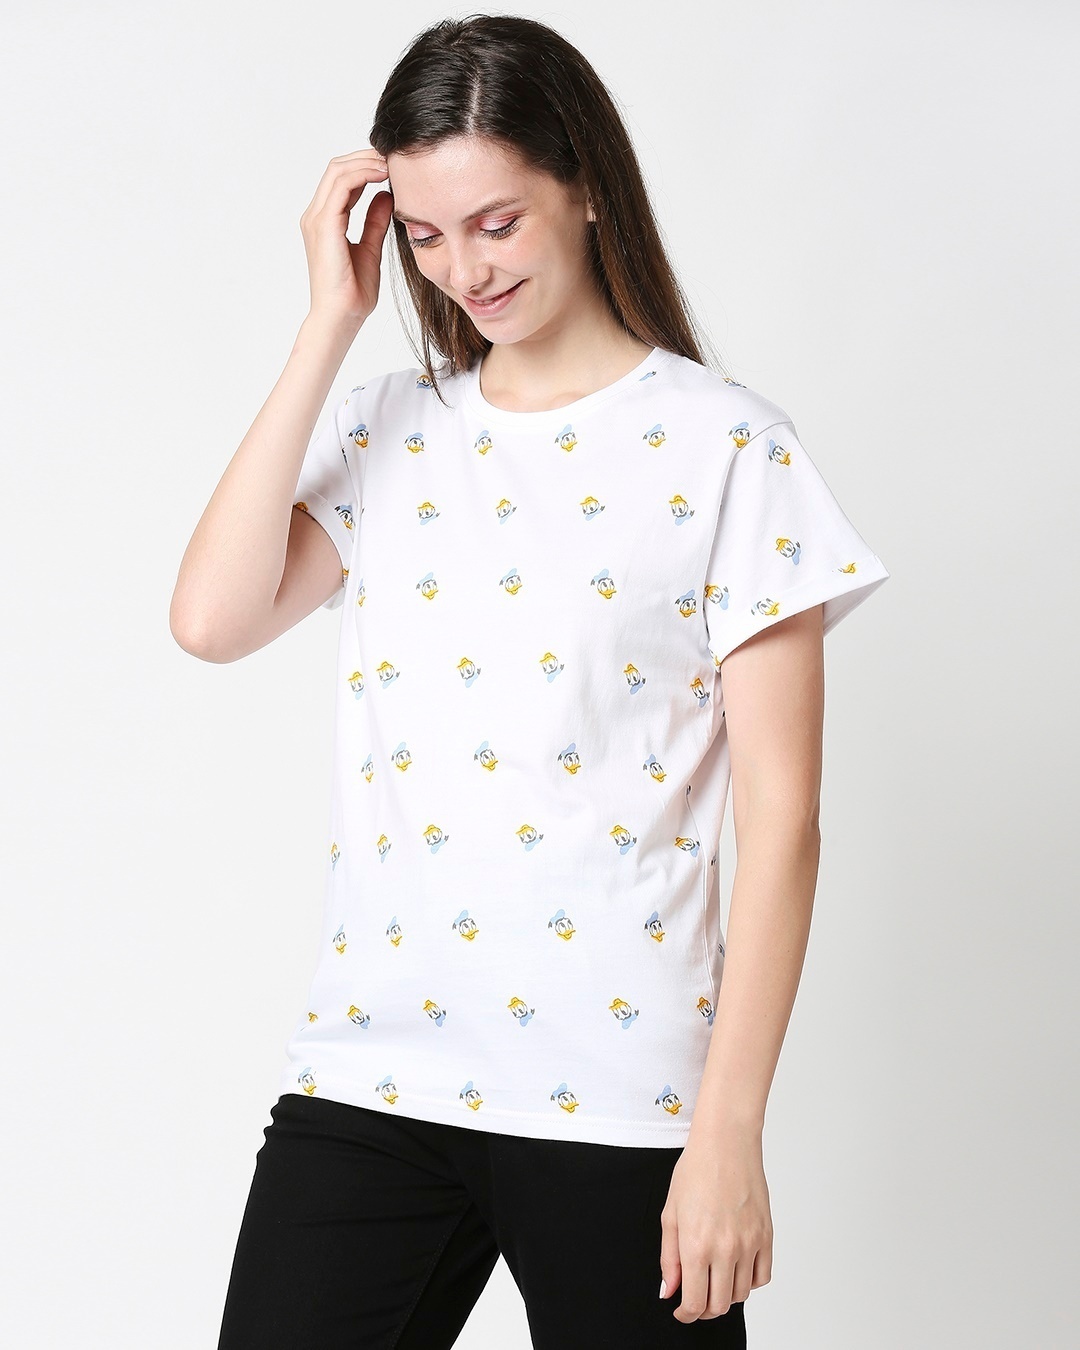 Shop Donald Duck (DL) All Over Printed Boyfriend T-Shirt-Design